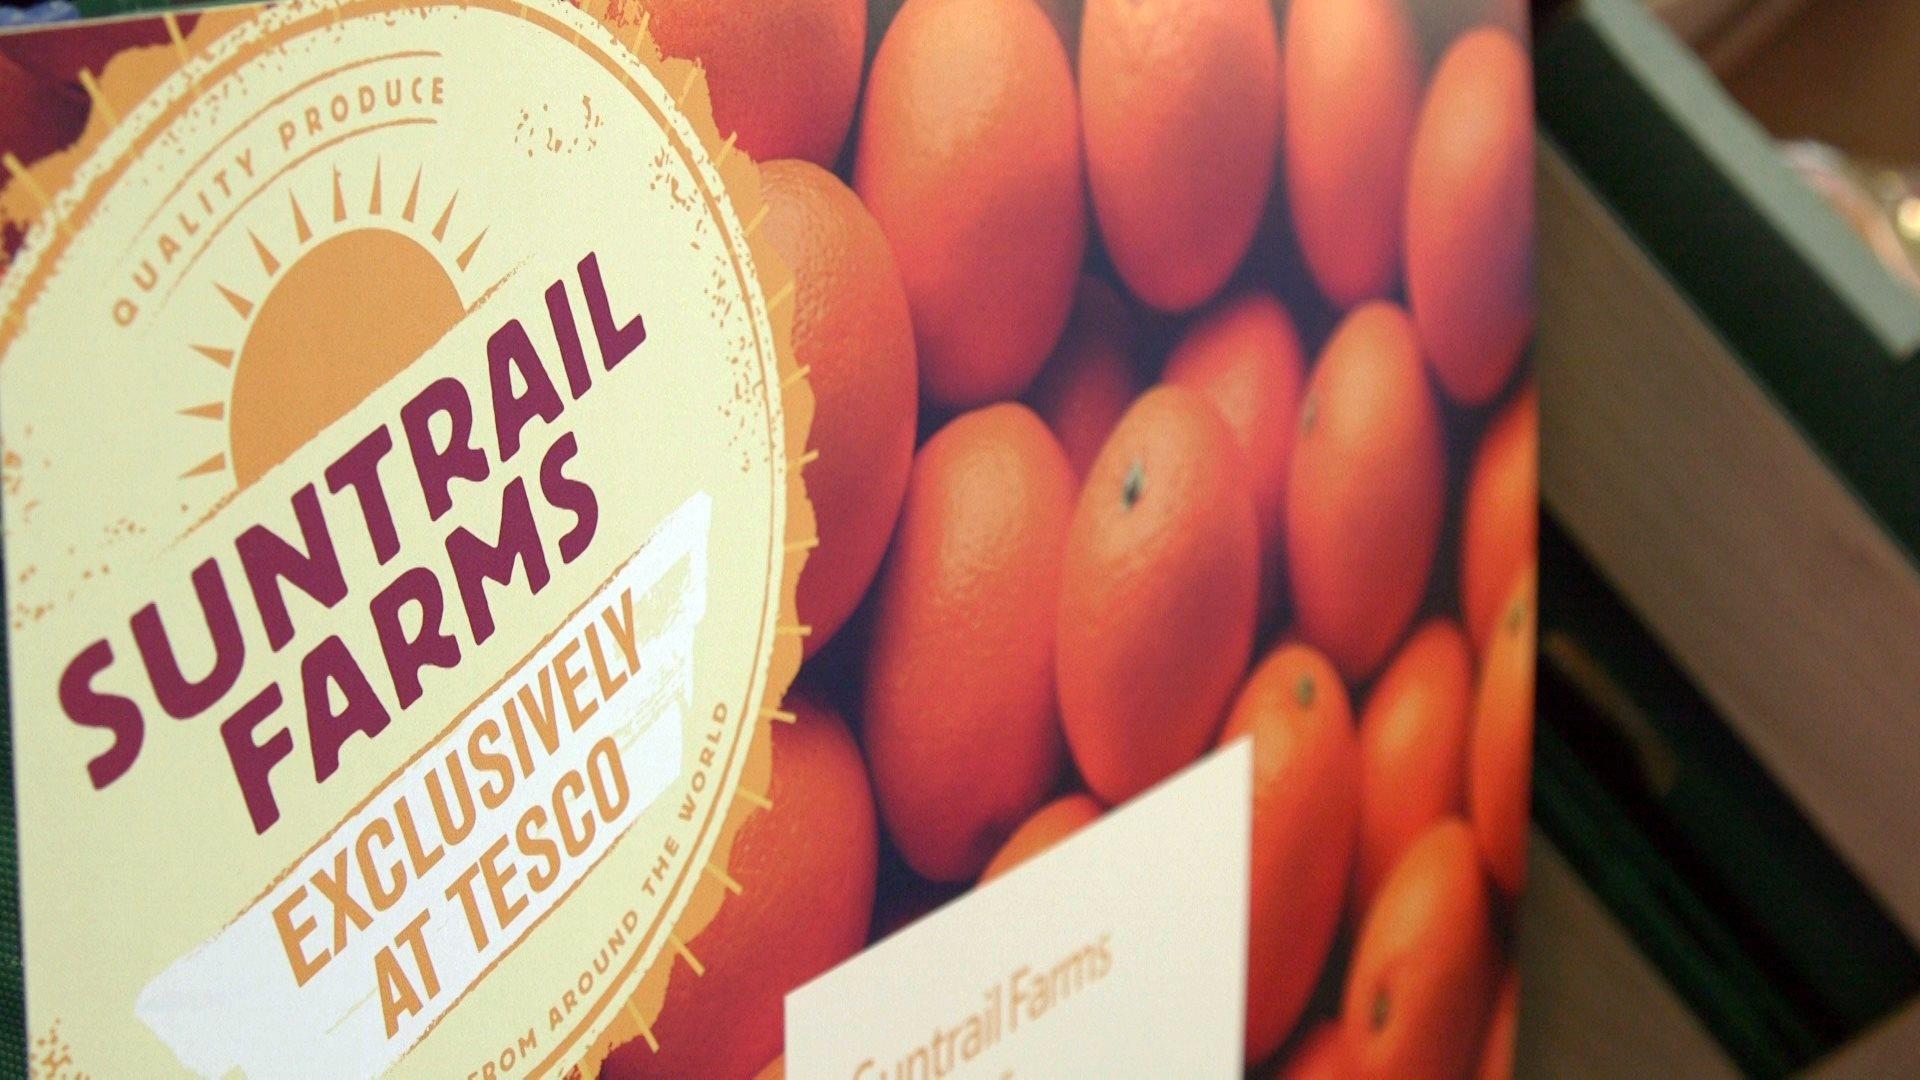 Fake' Tesco farm brands risk misleading consumers